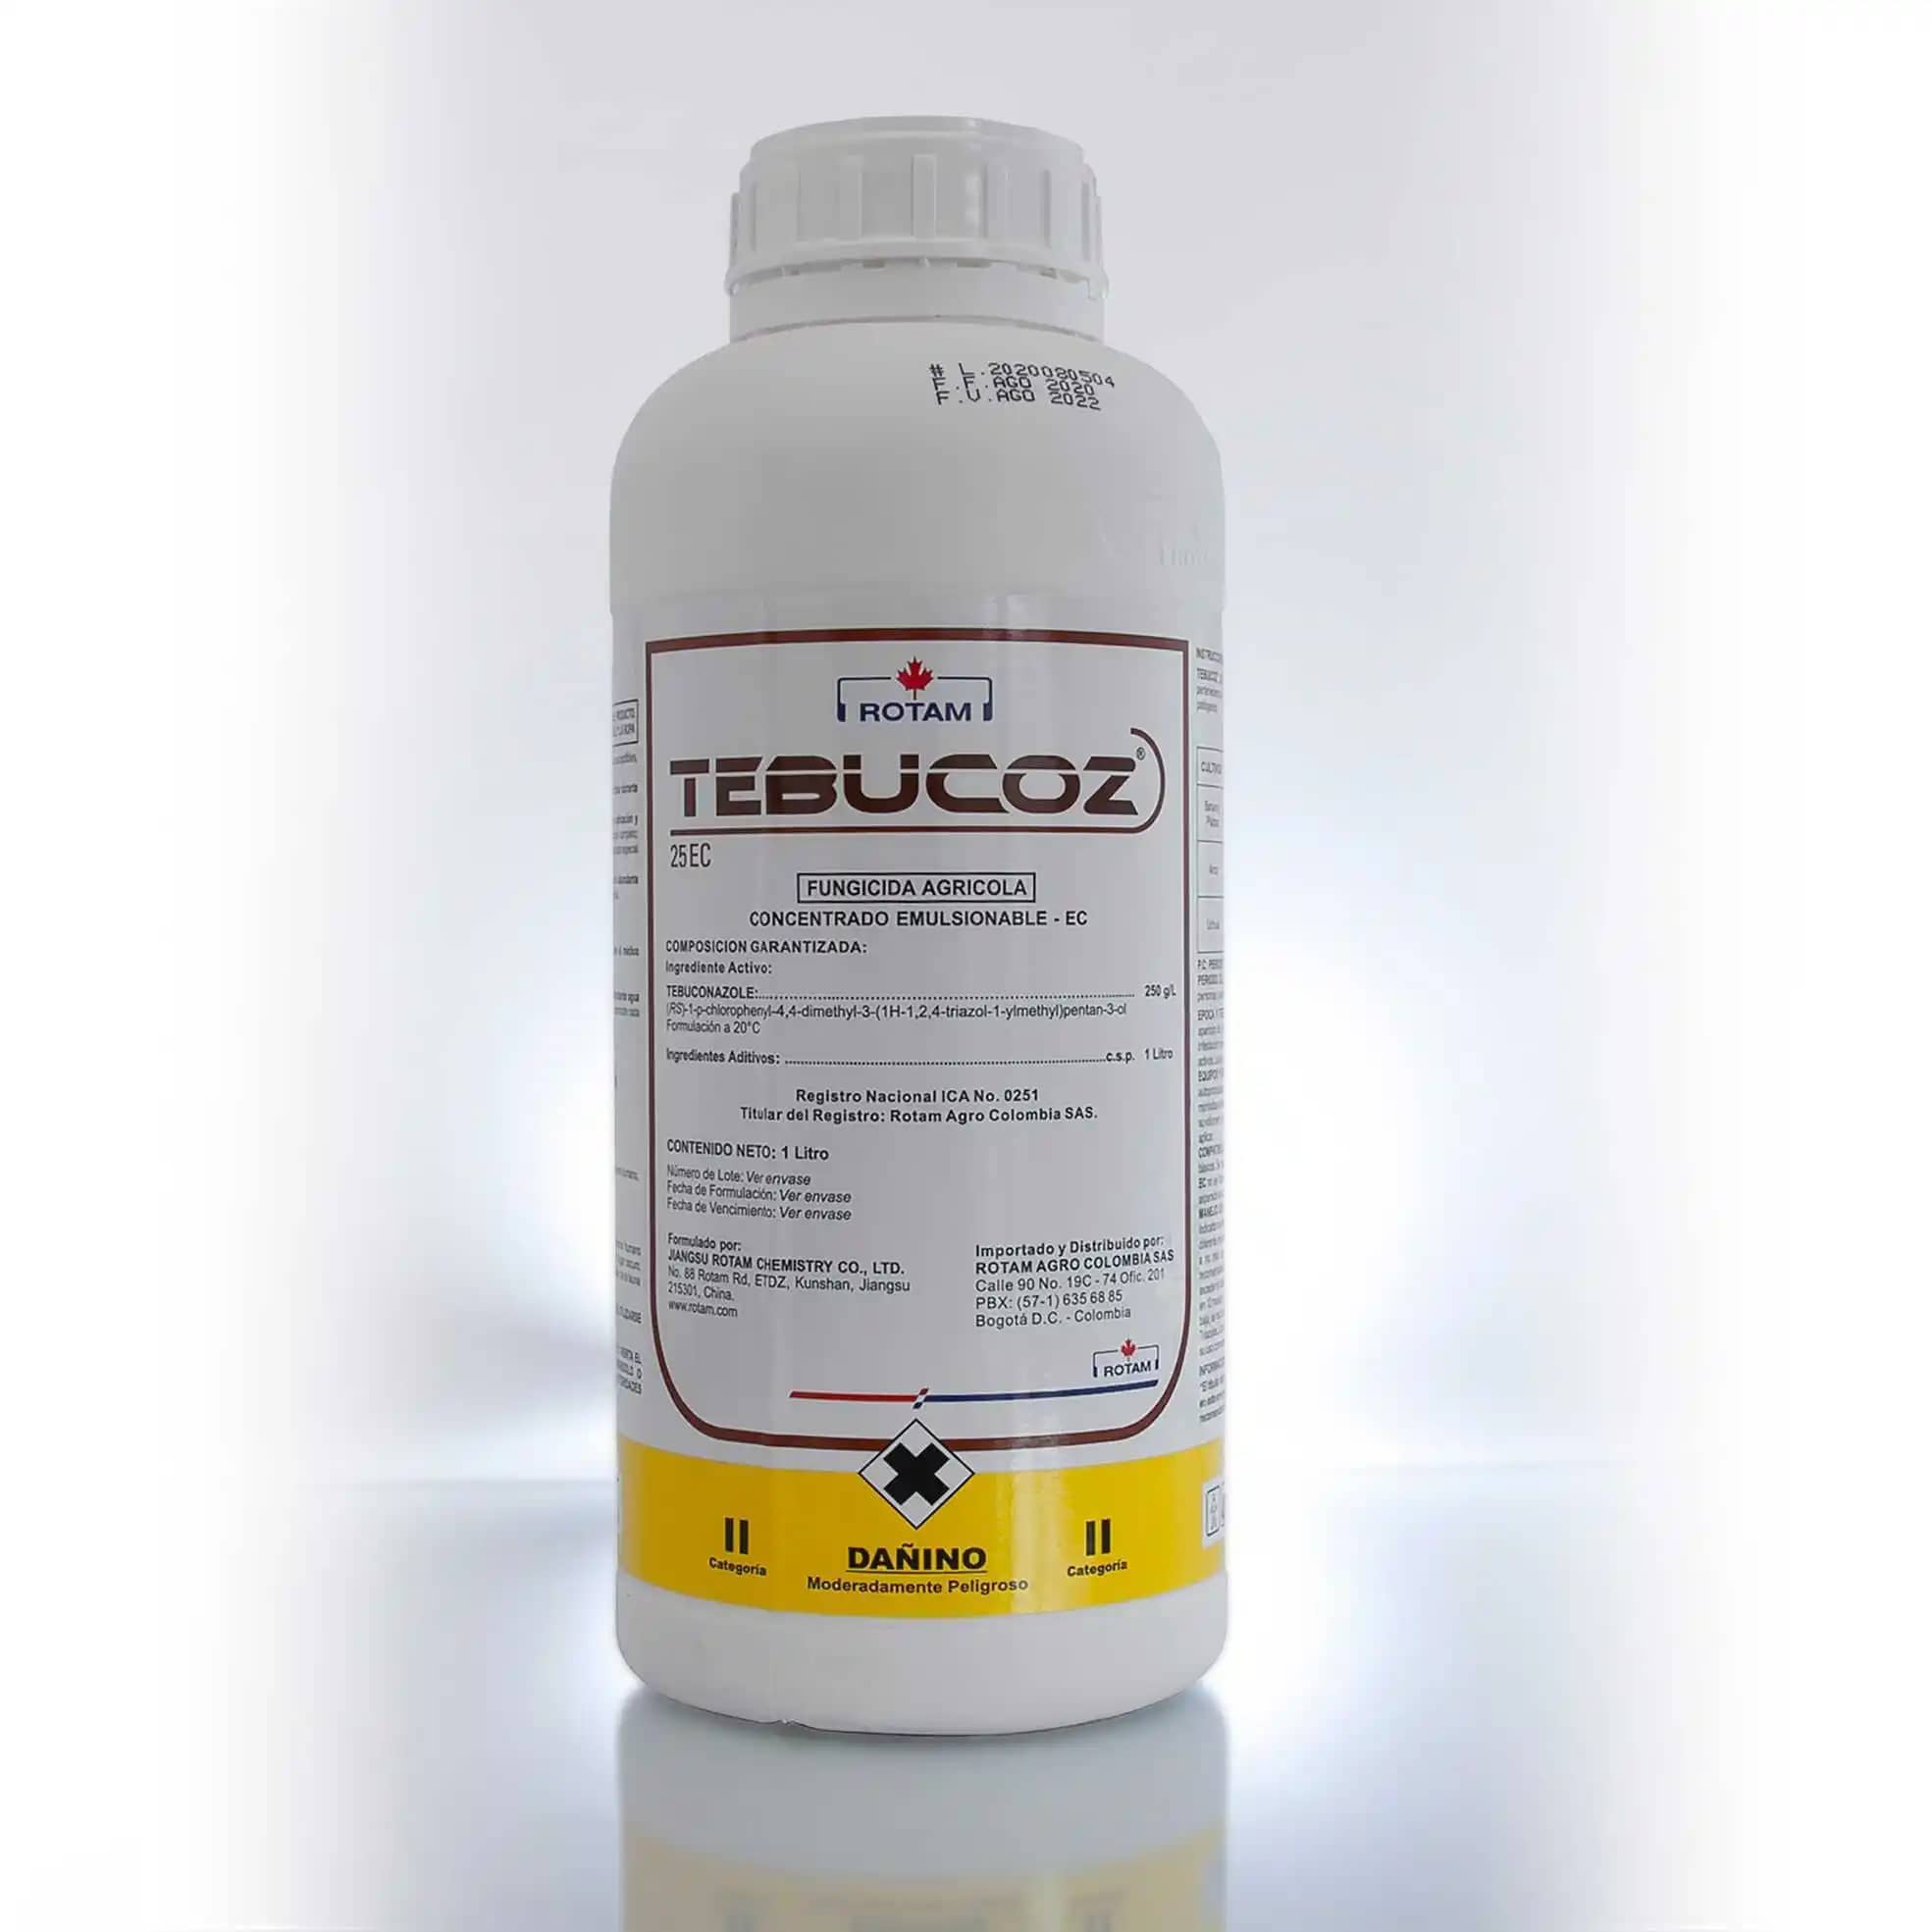 Fungicida Tebucoz 25 EC x 1 Lt - Rotam